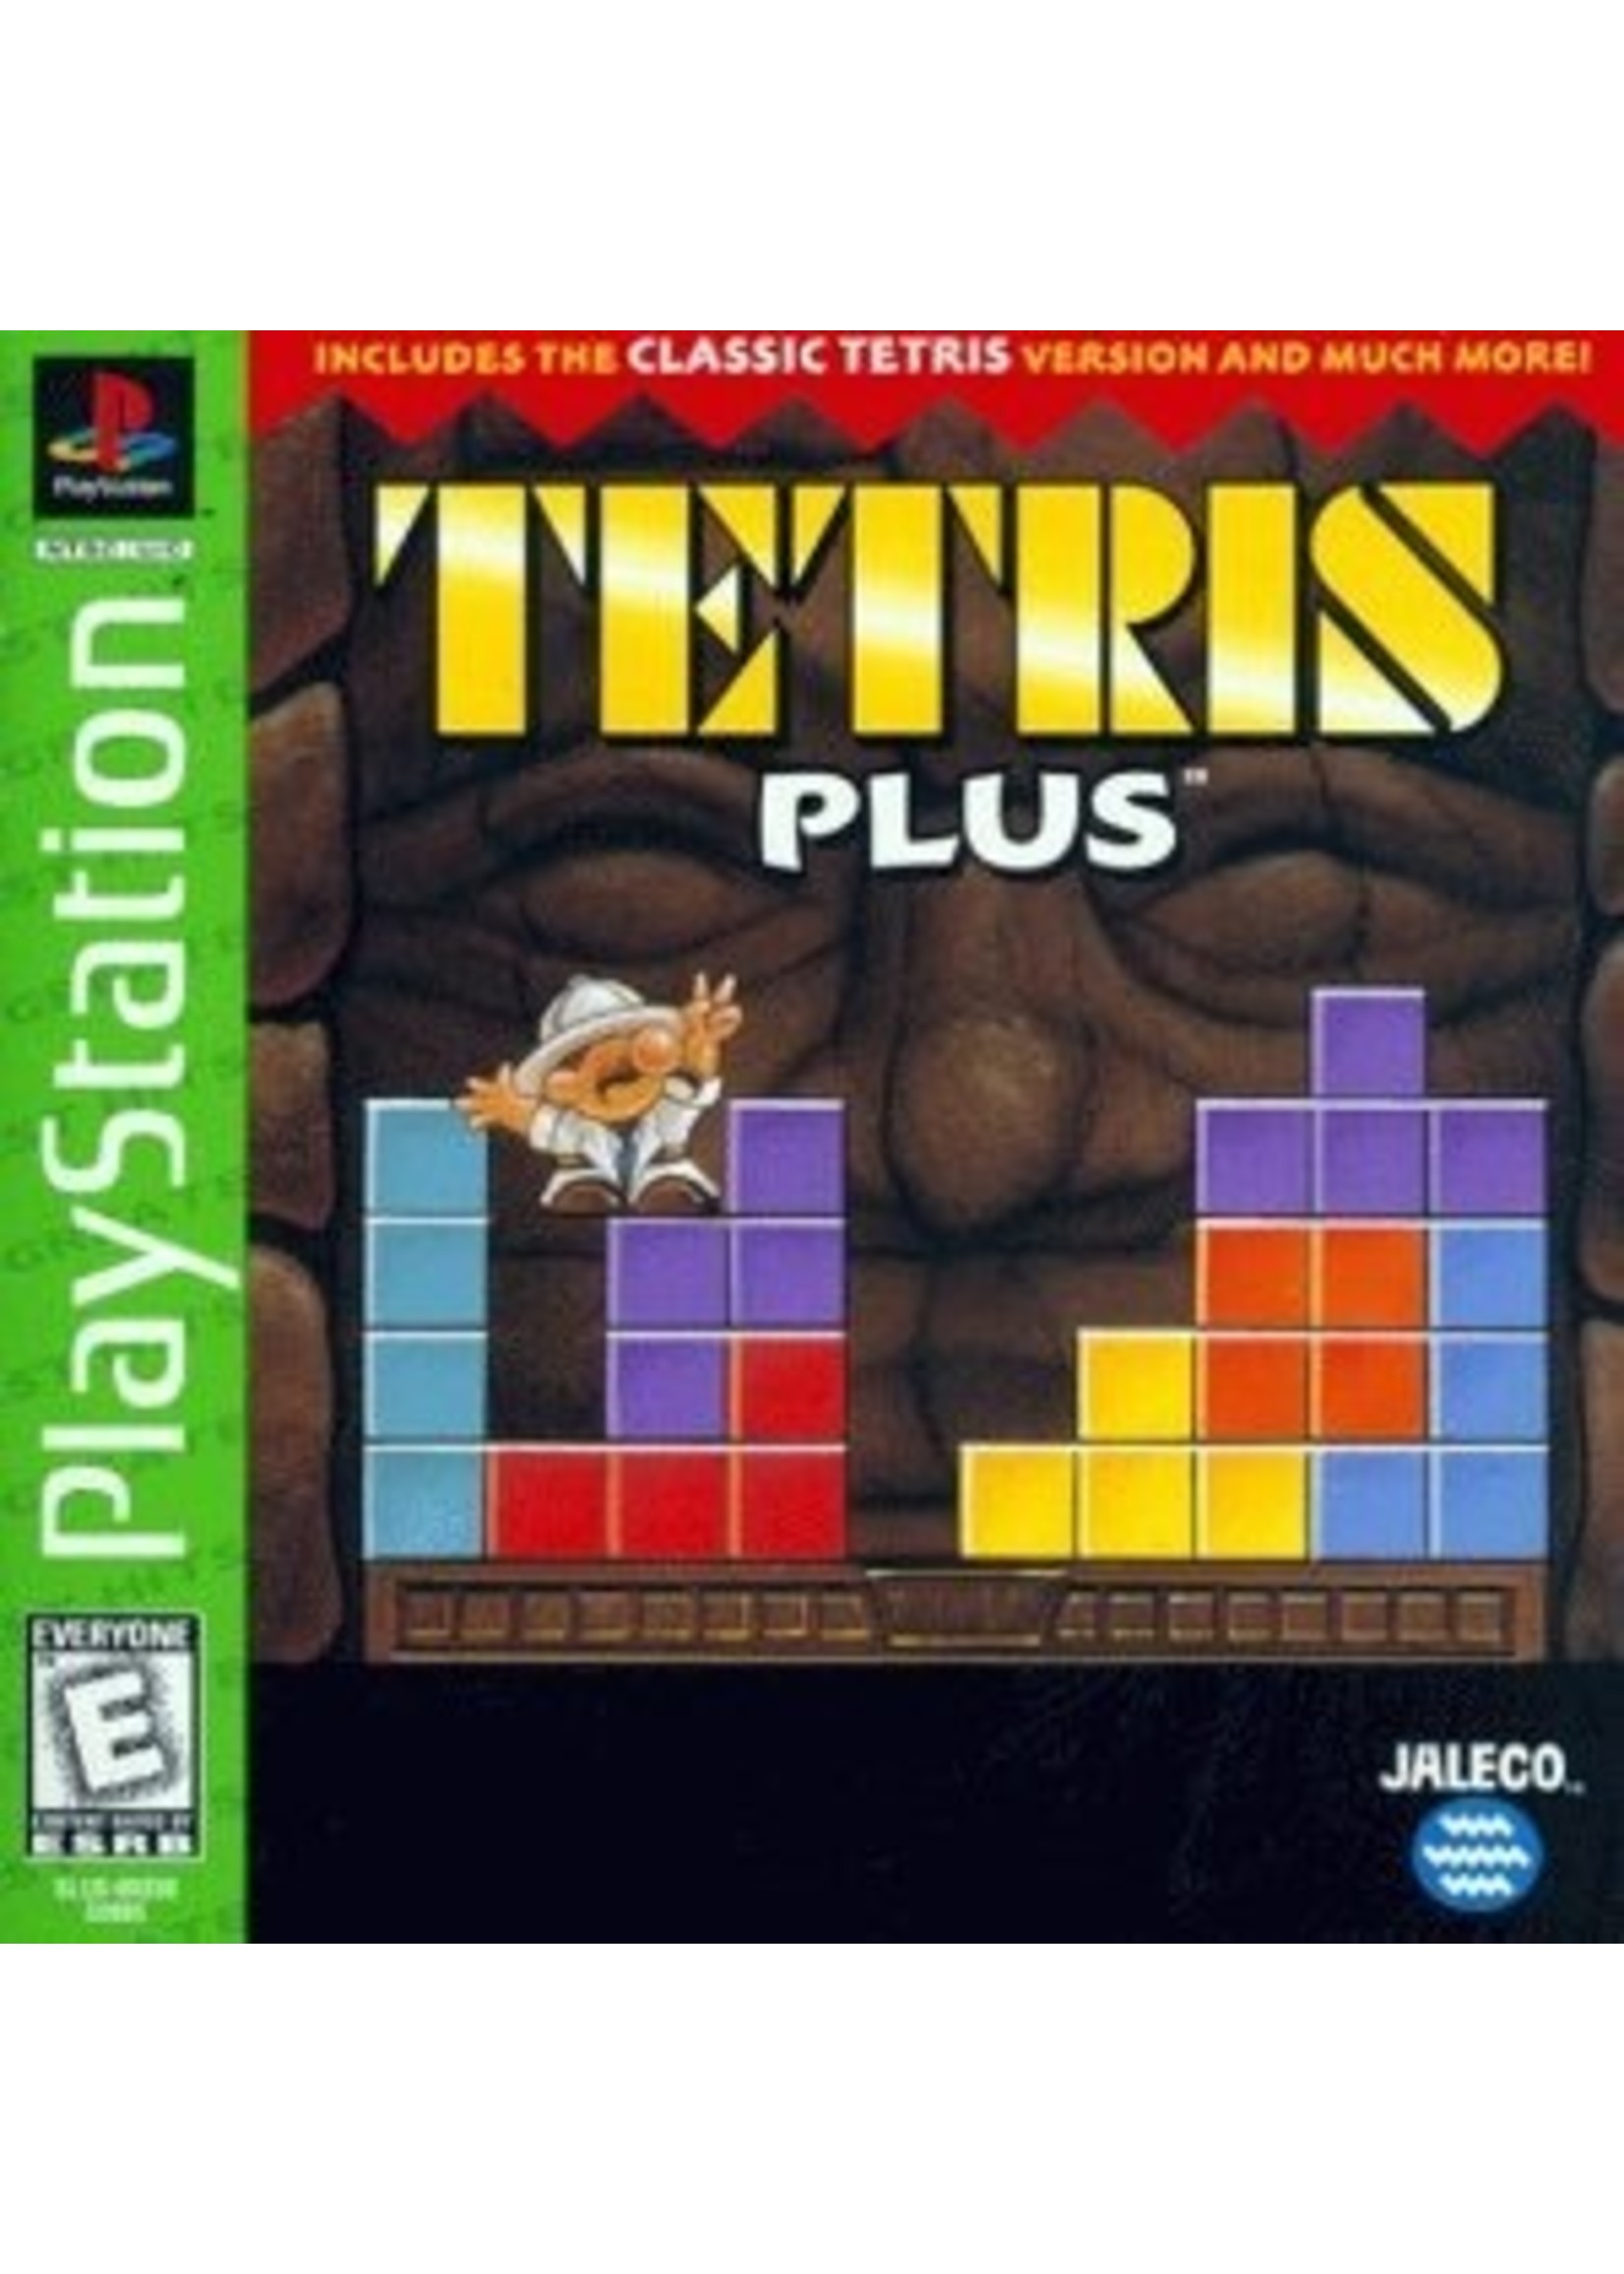 Sony Playstation 1 (PS1) Tetris Plus